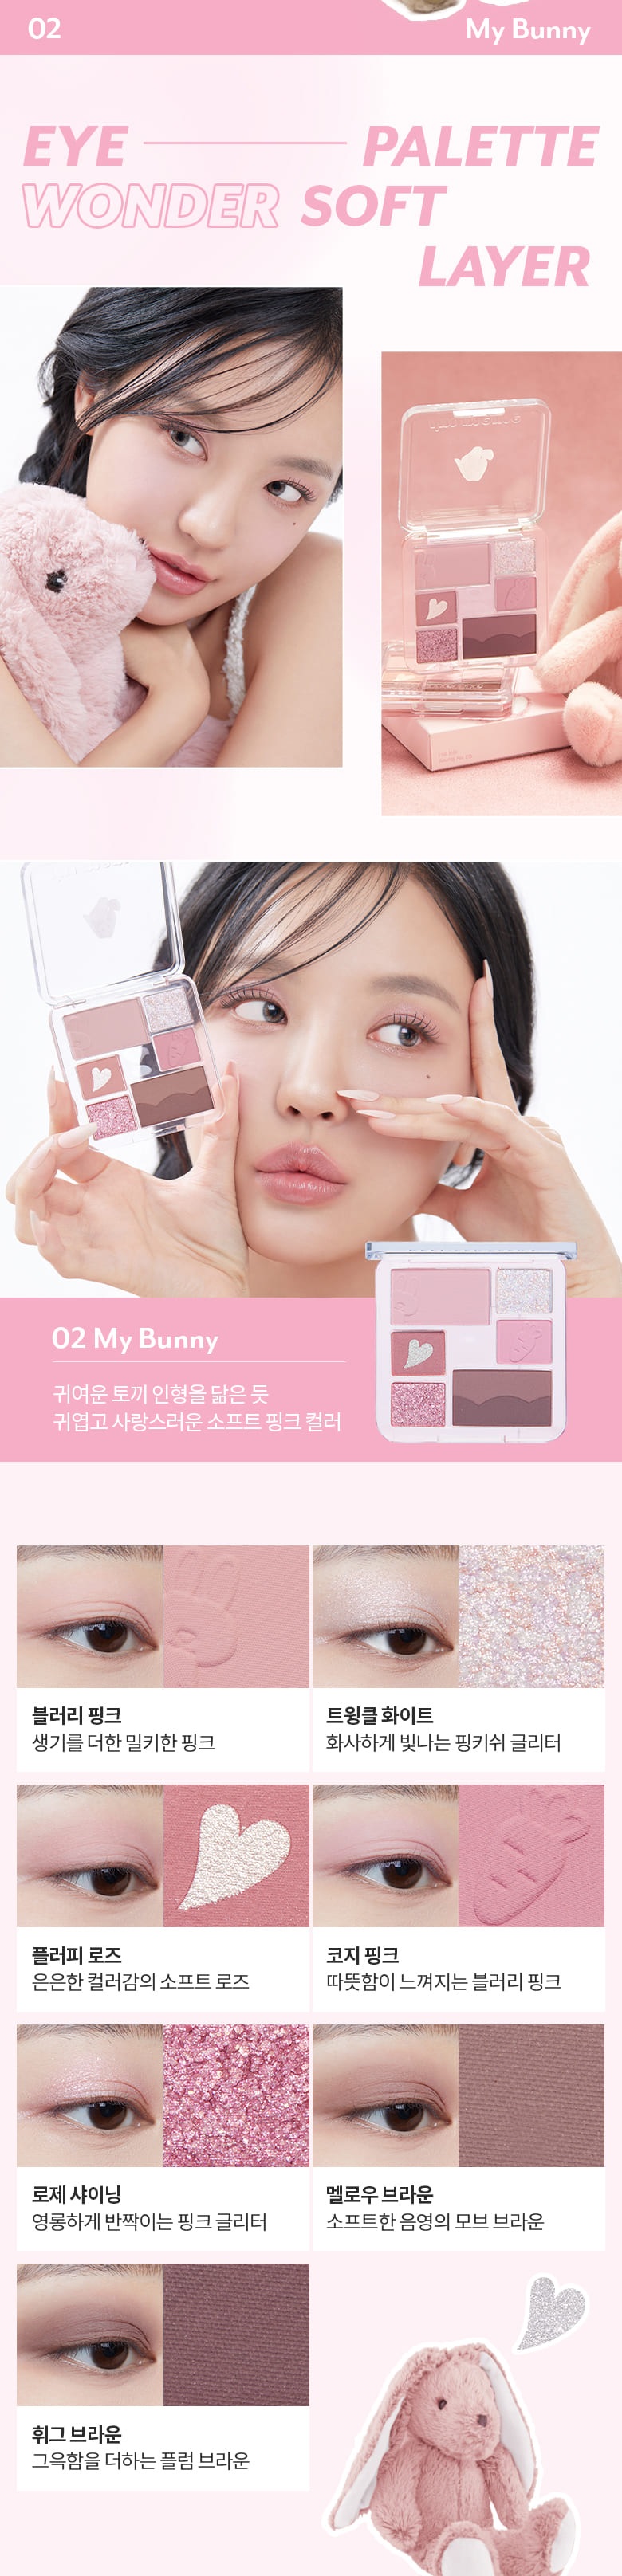 MEMEBOX Wonder Soft Layer Eye Palette korean skincare product online shop malaysia china macau3